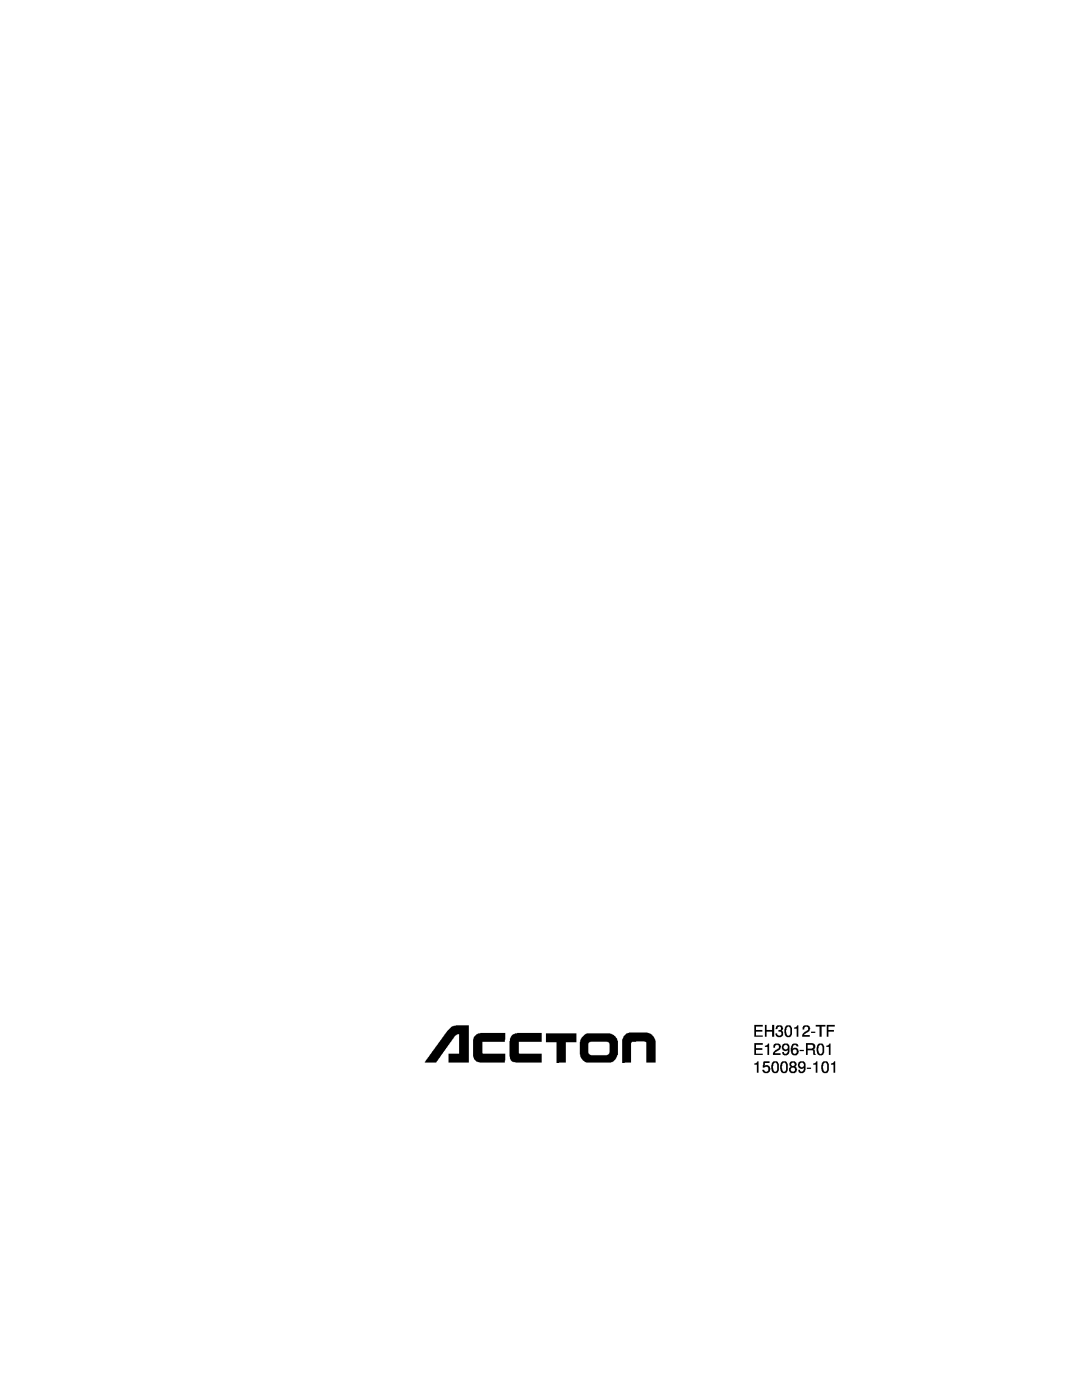 Accton Technology 12se manual EH3012-TF E1296-R01 